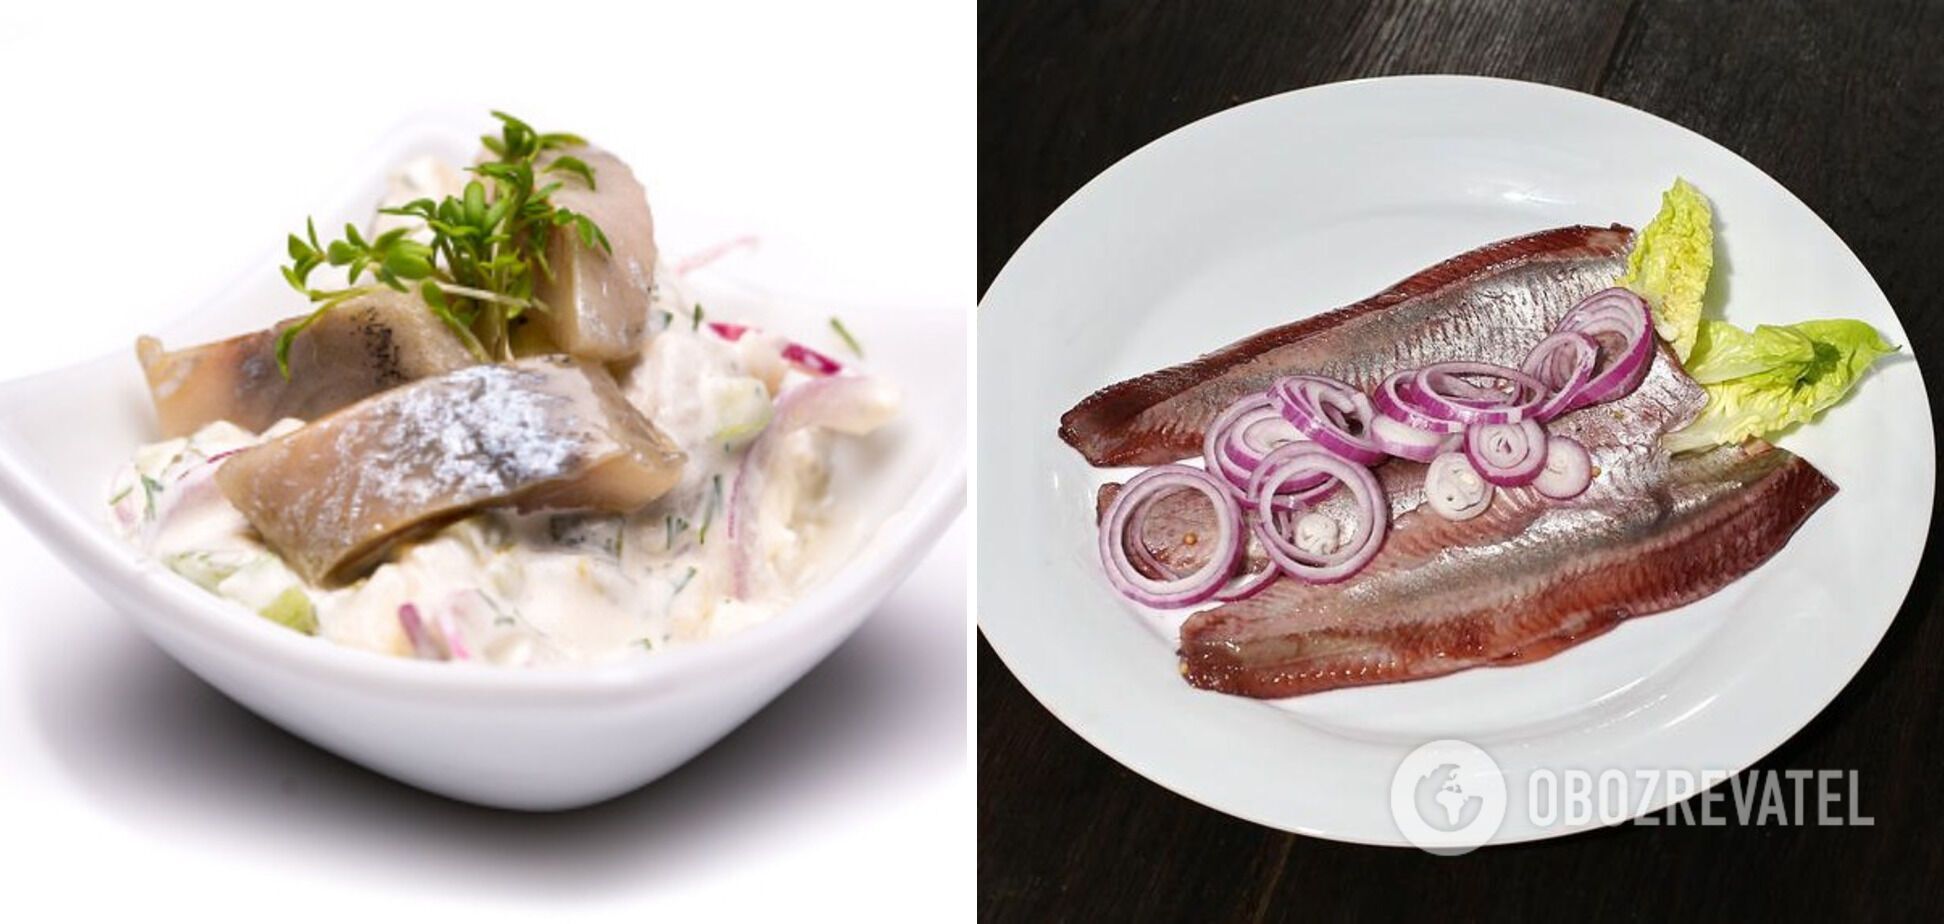 Salad of herring, peas and corn